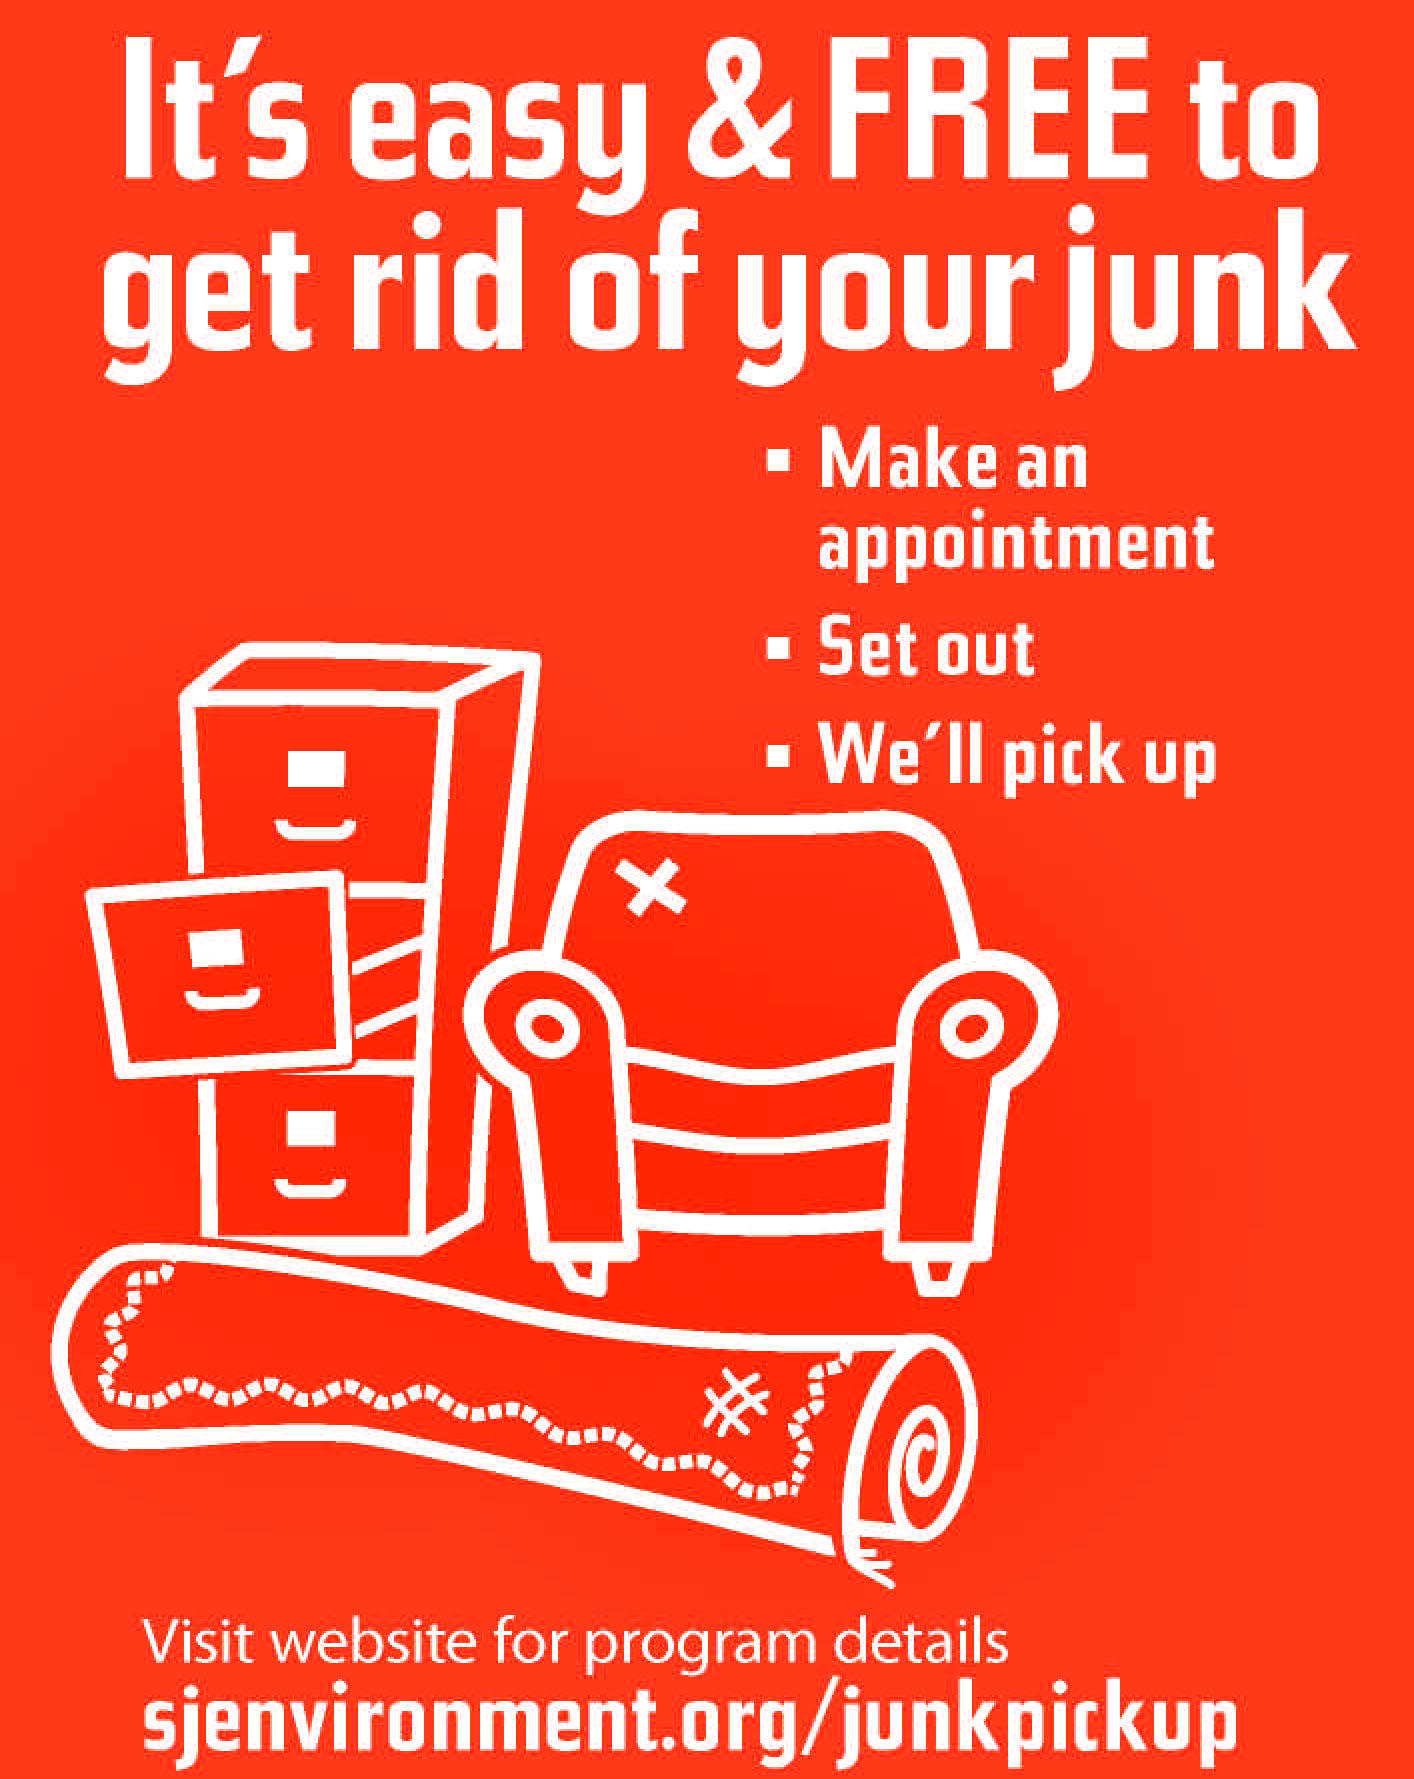 FREE Junk Pickup (City of San José) 